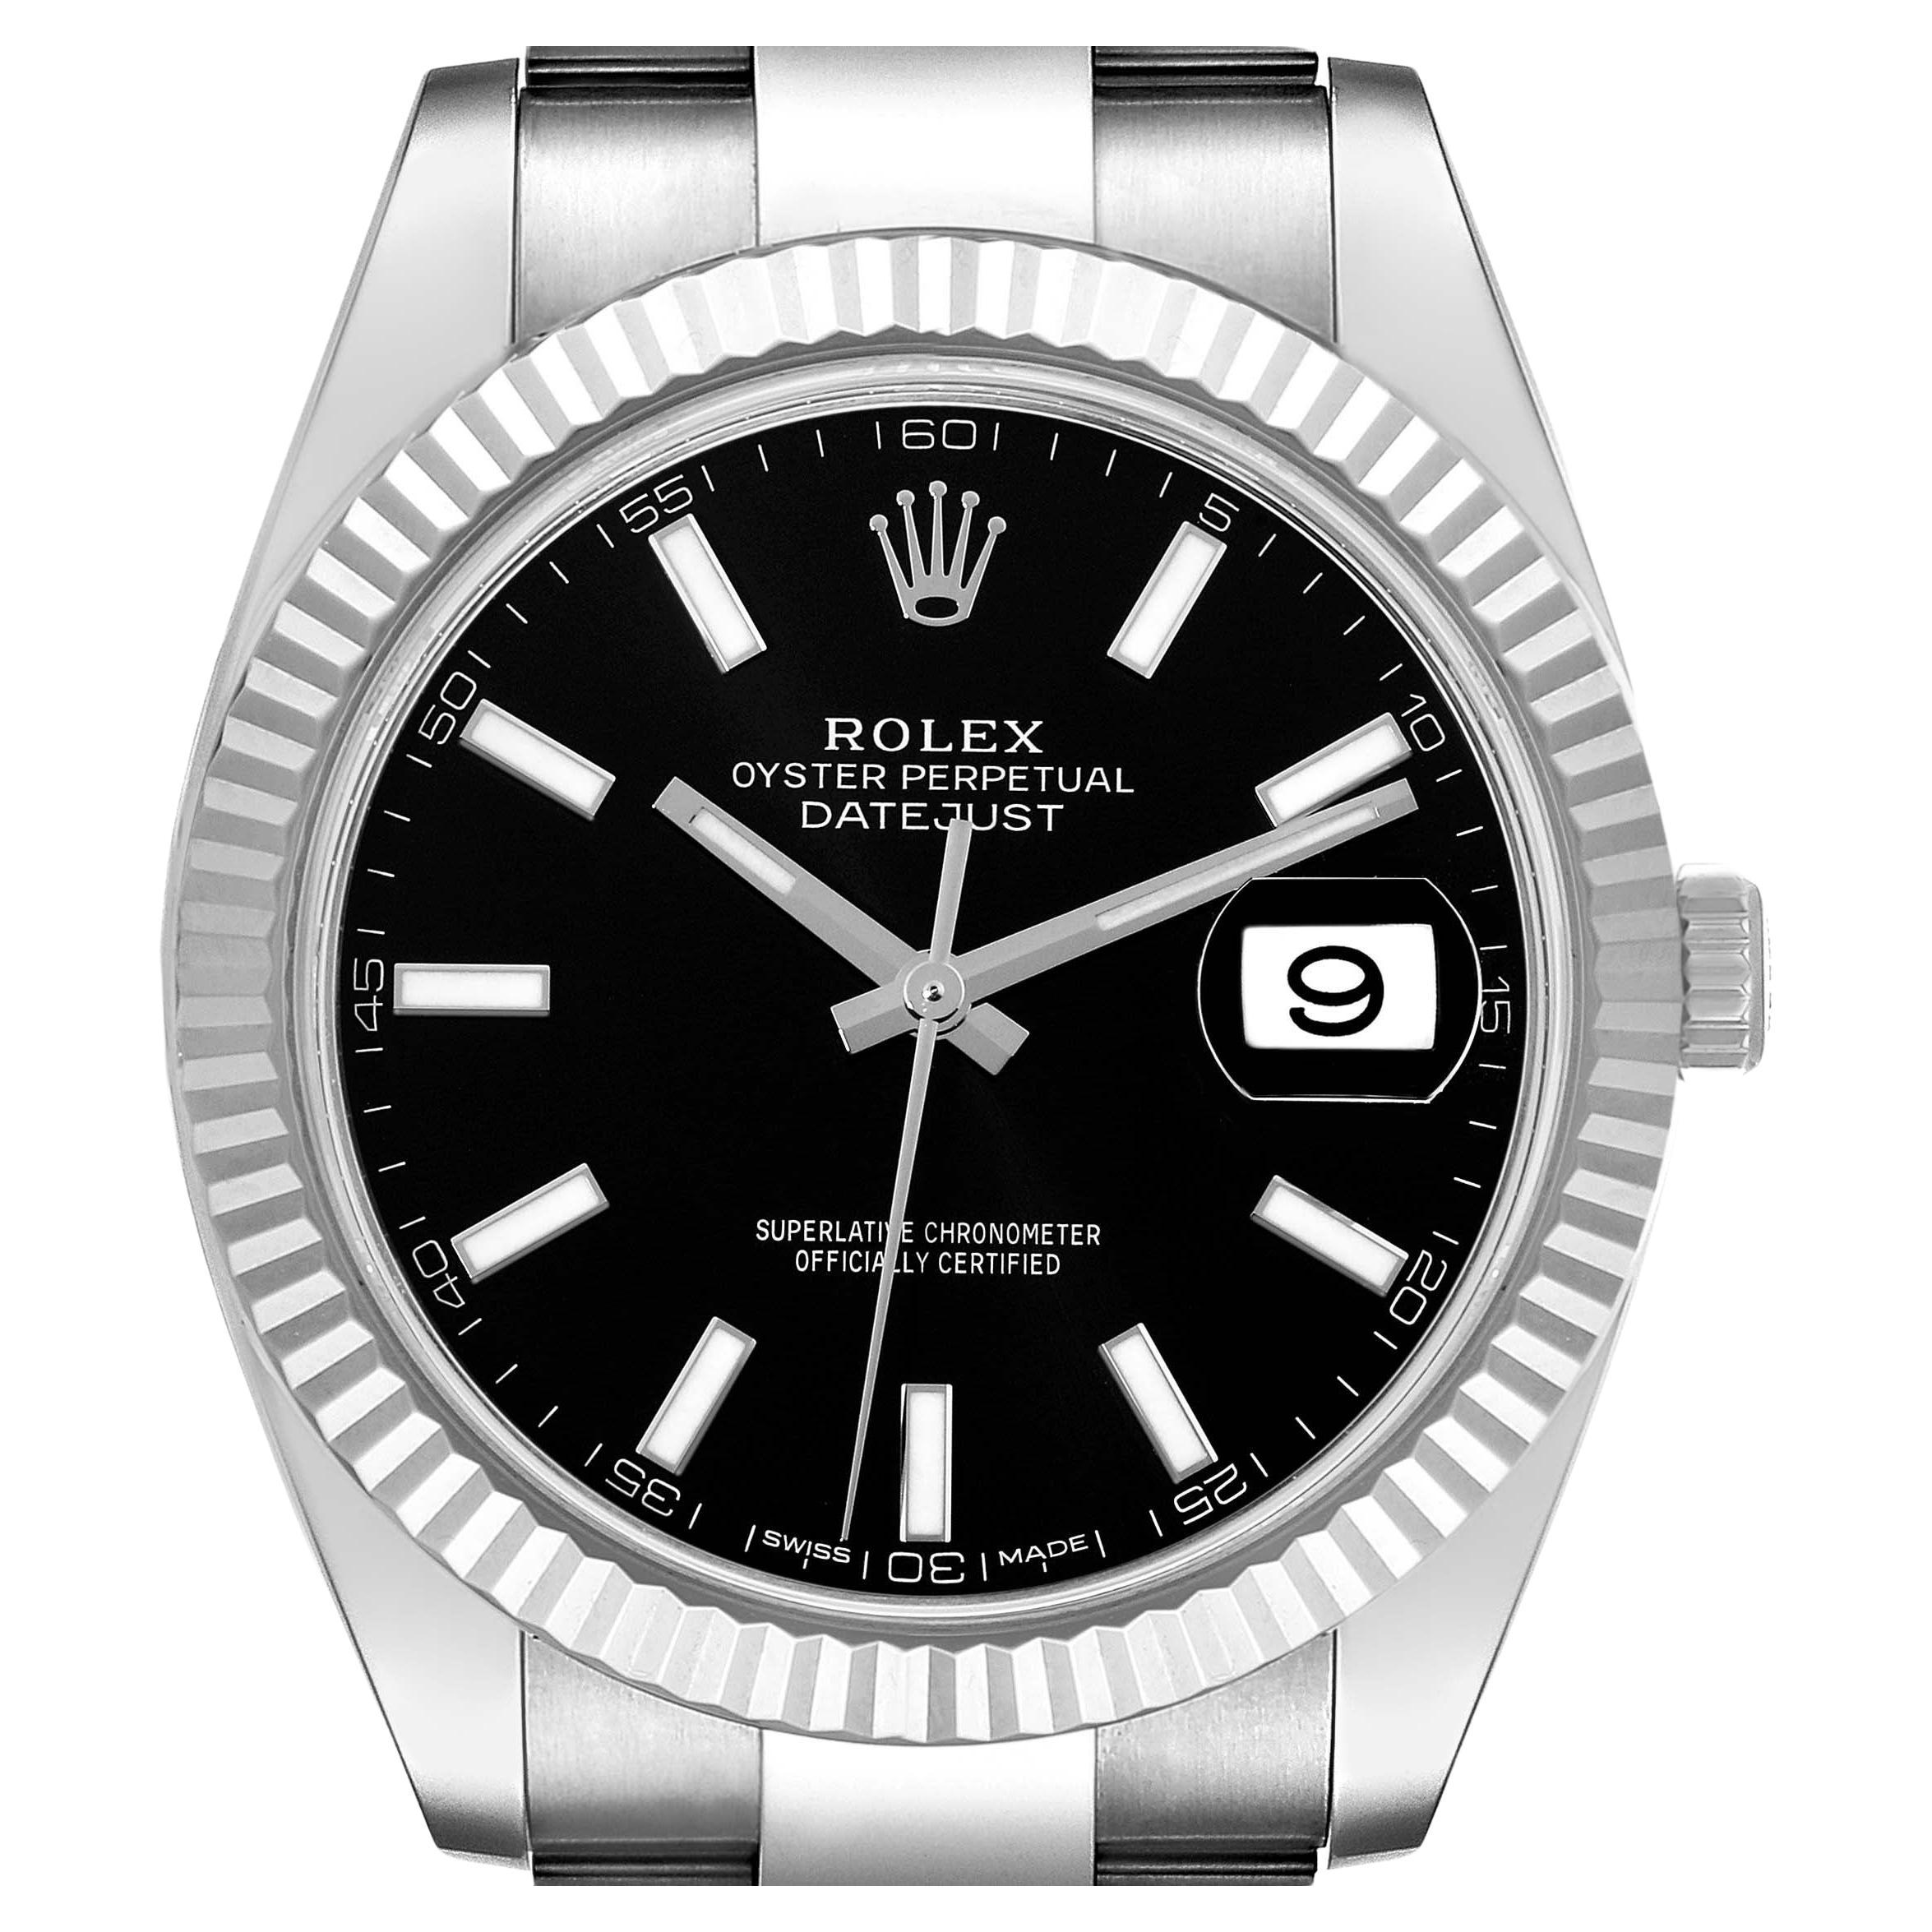 Rolex Datejust 41 Steel White Gold Black Dial Mens Watch 126334 Box Card